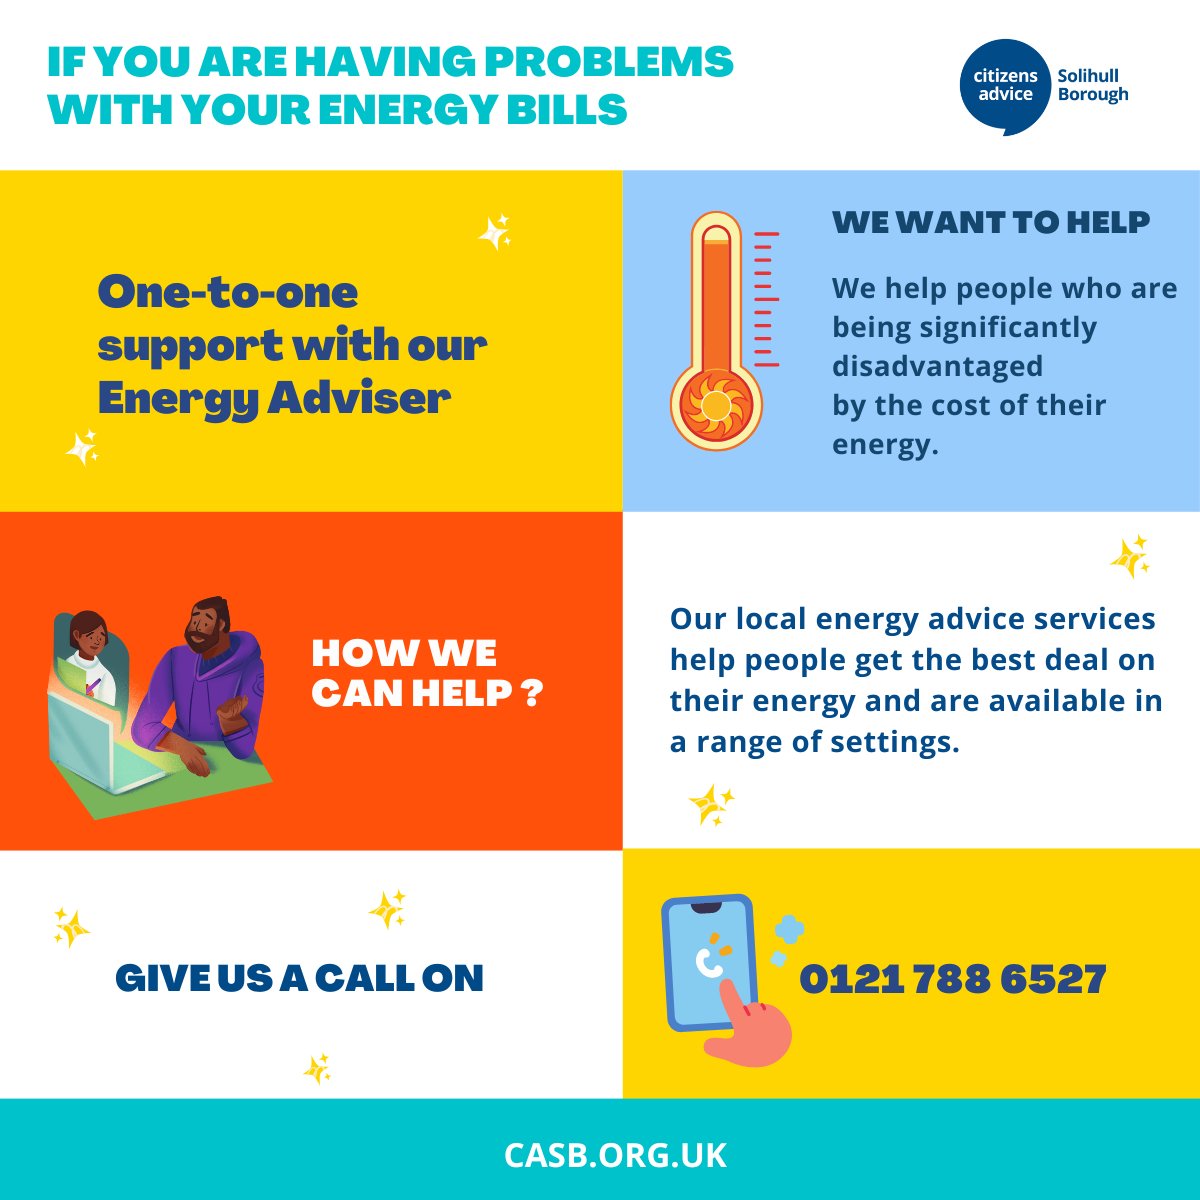 Call for more information: 0121 788 65 27

#WeAreCitizensAdvice #CASB #energysupport #energybills